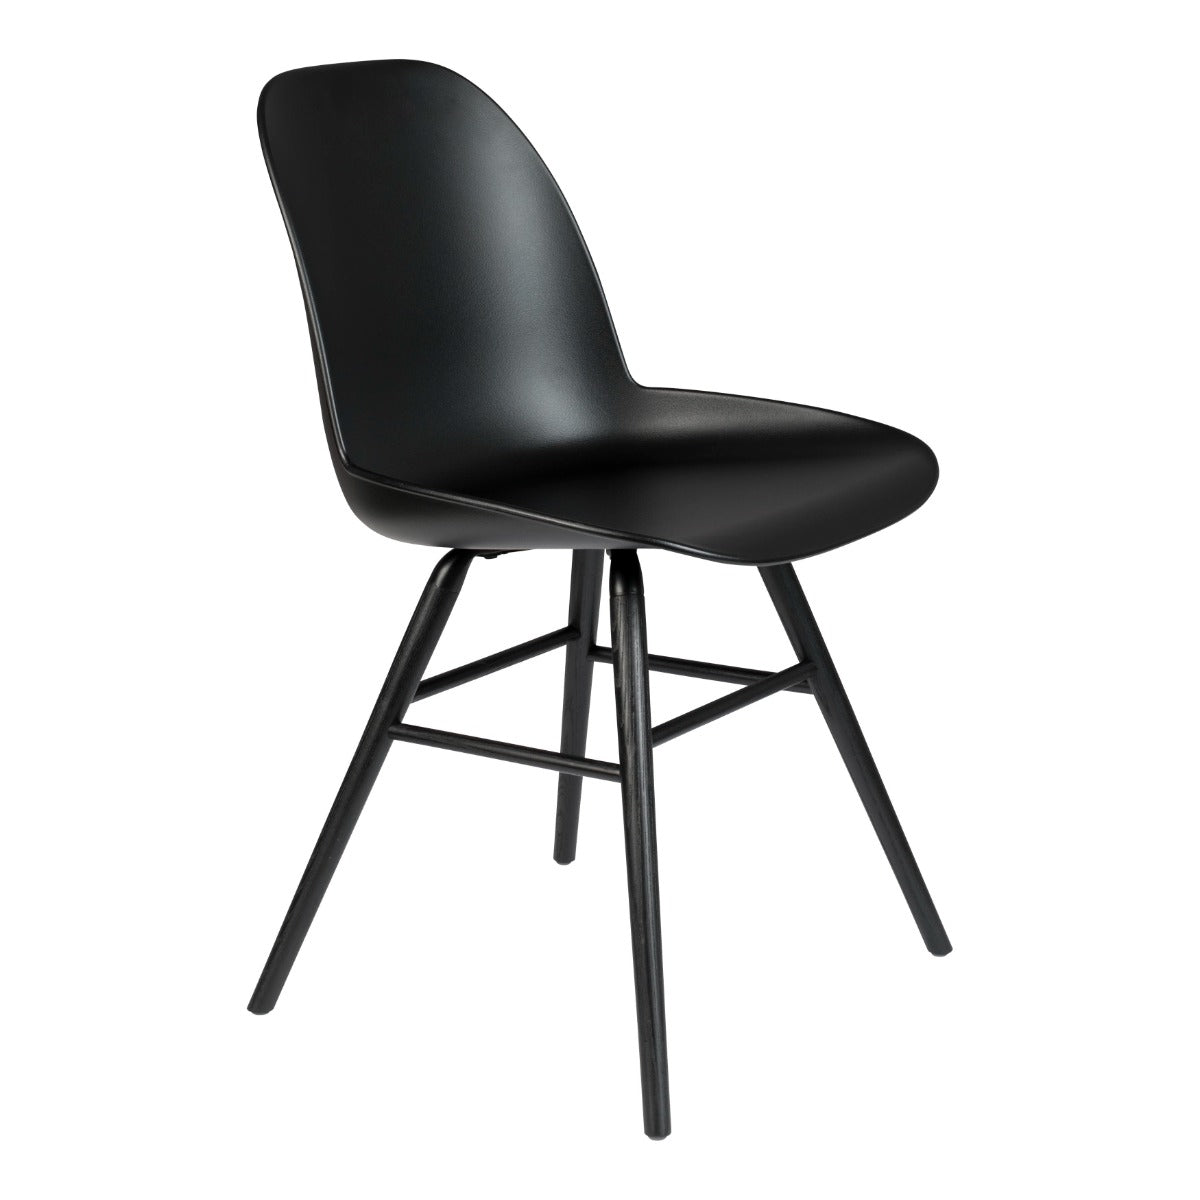 ALBERT KUIP chair black, Zuiver, Eye on Design